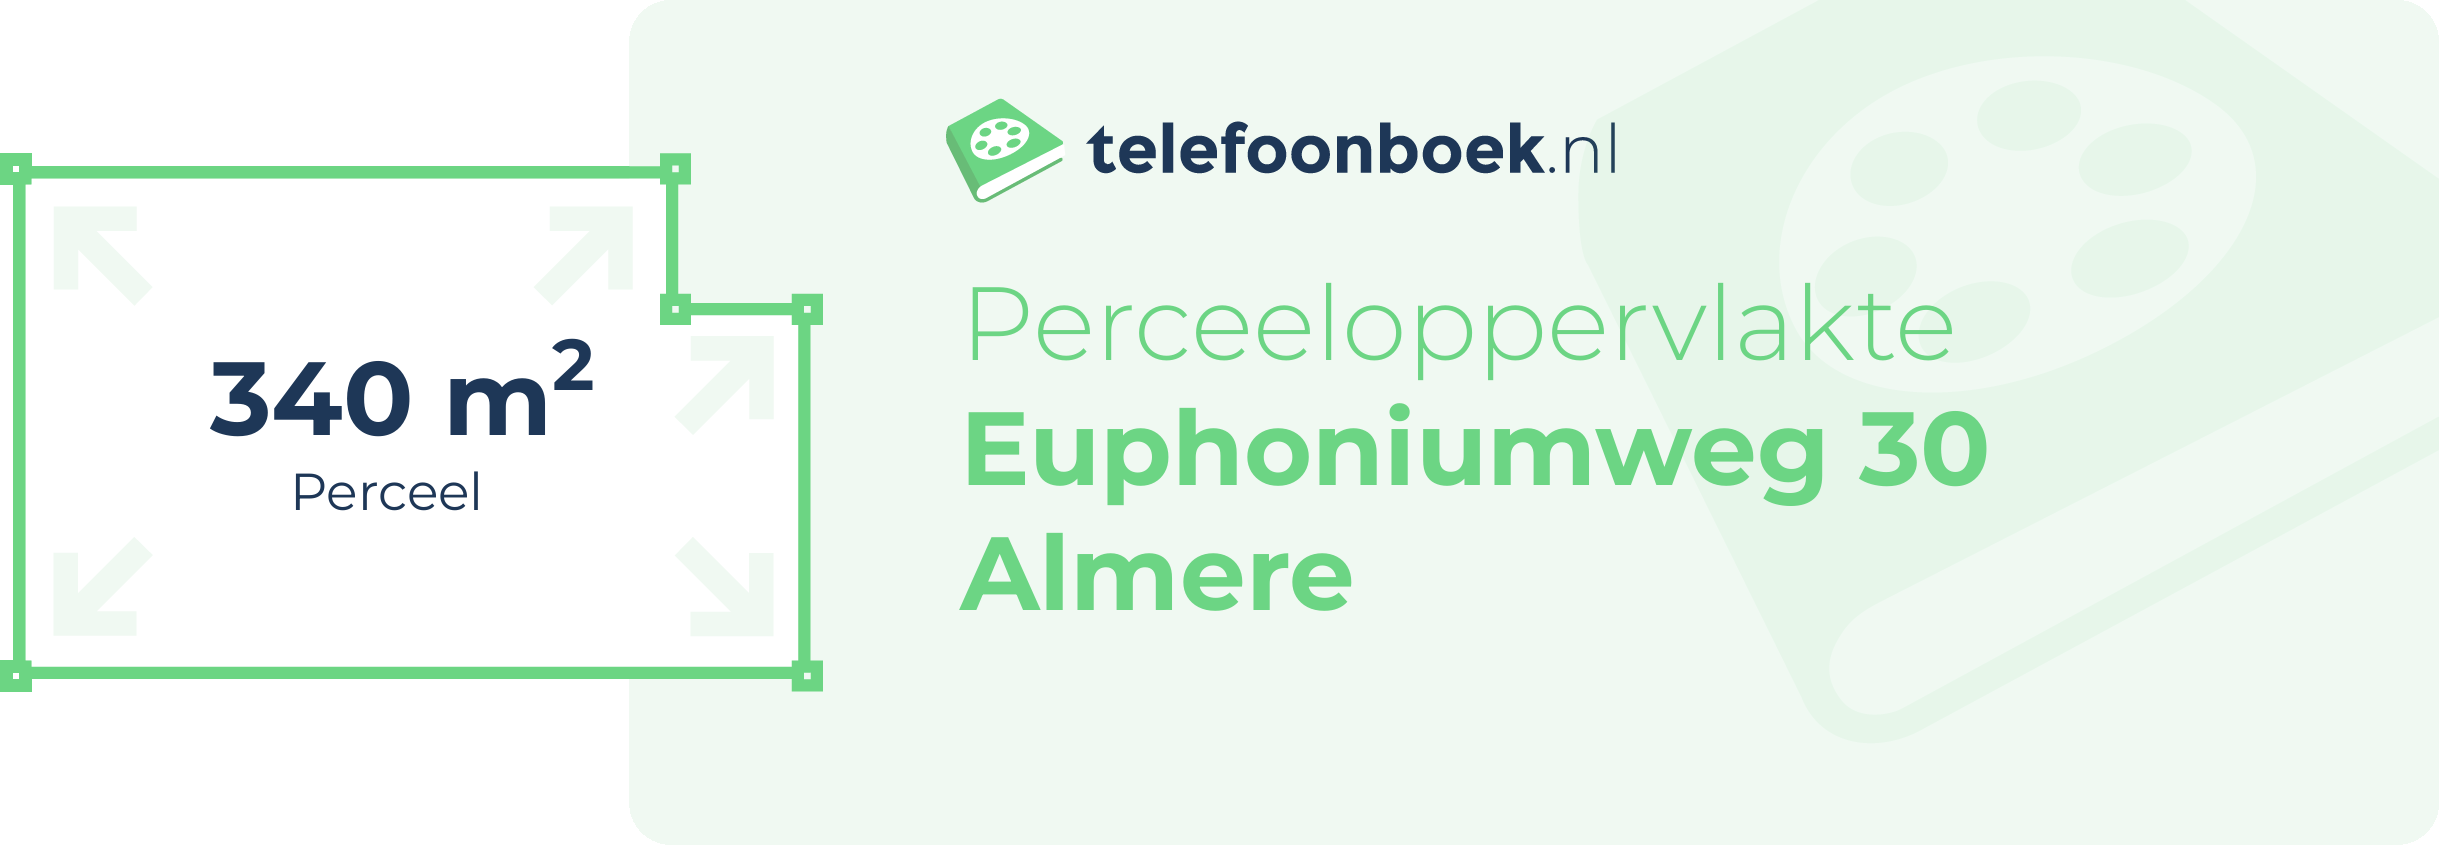 Perceeloppervlakte Euphoniumweg 30 Almere